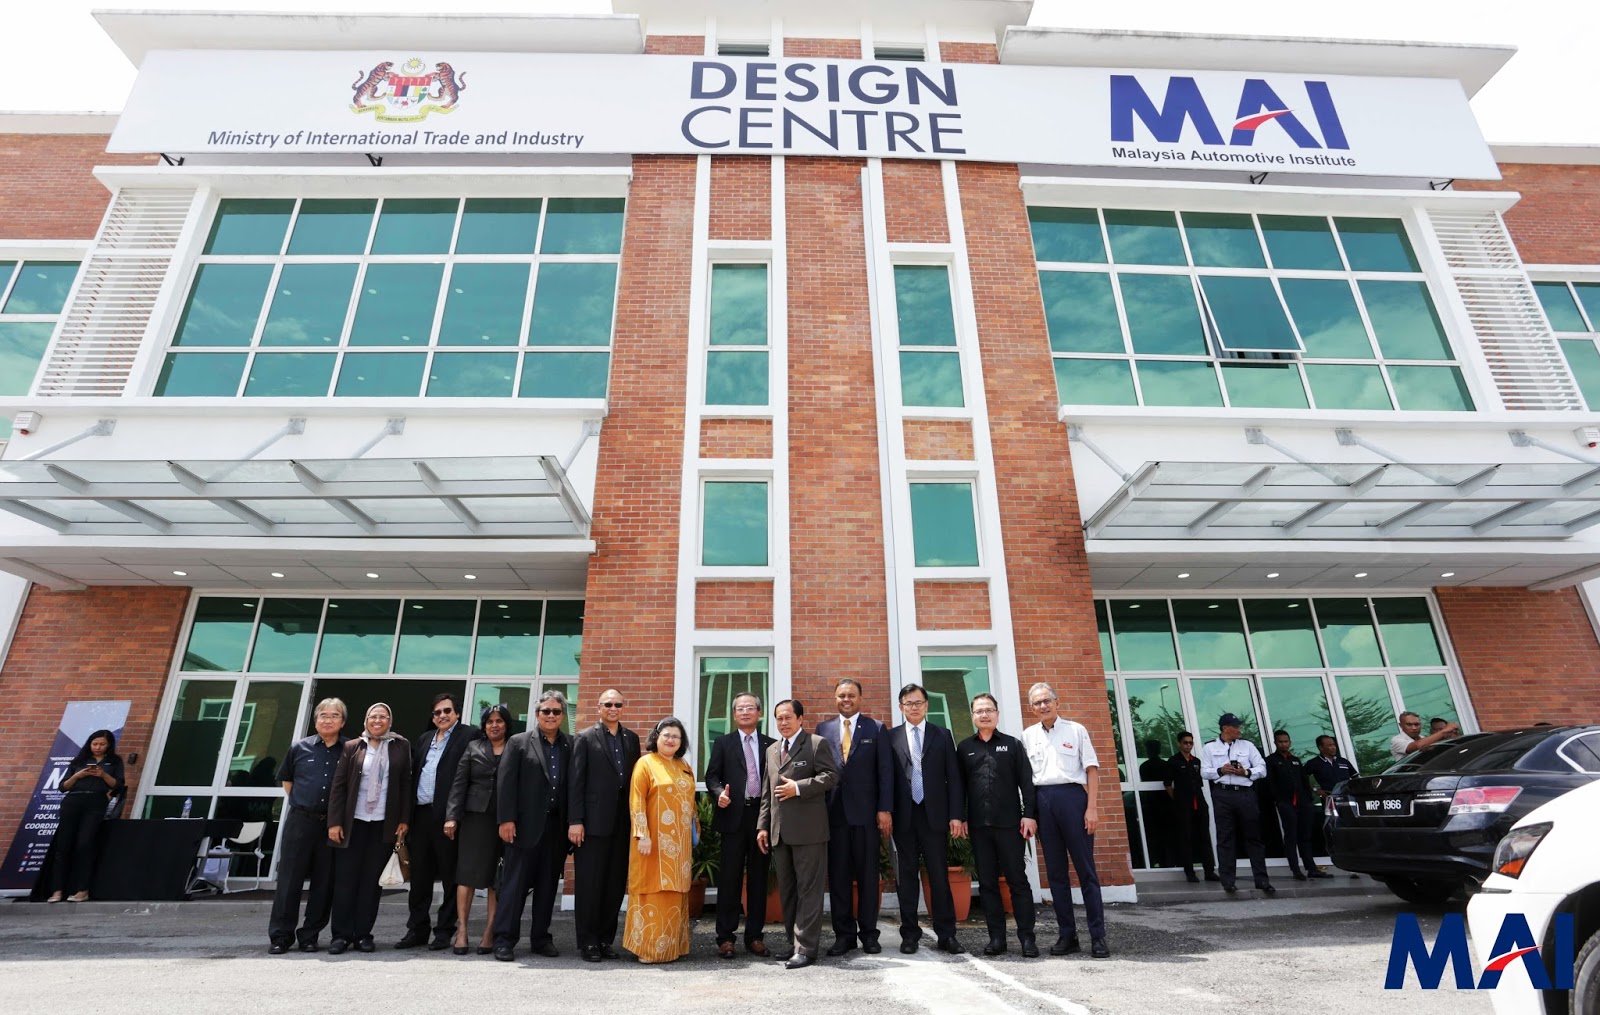 Motoring-Malaysia: MALAYSIA AUTOMOTIVE INSTITUTE (MAI ...